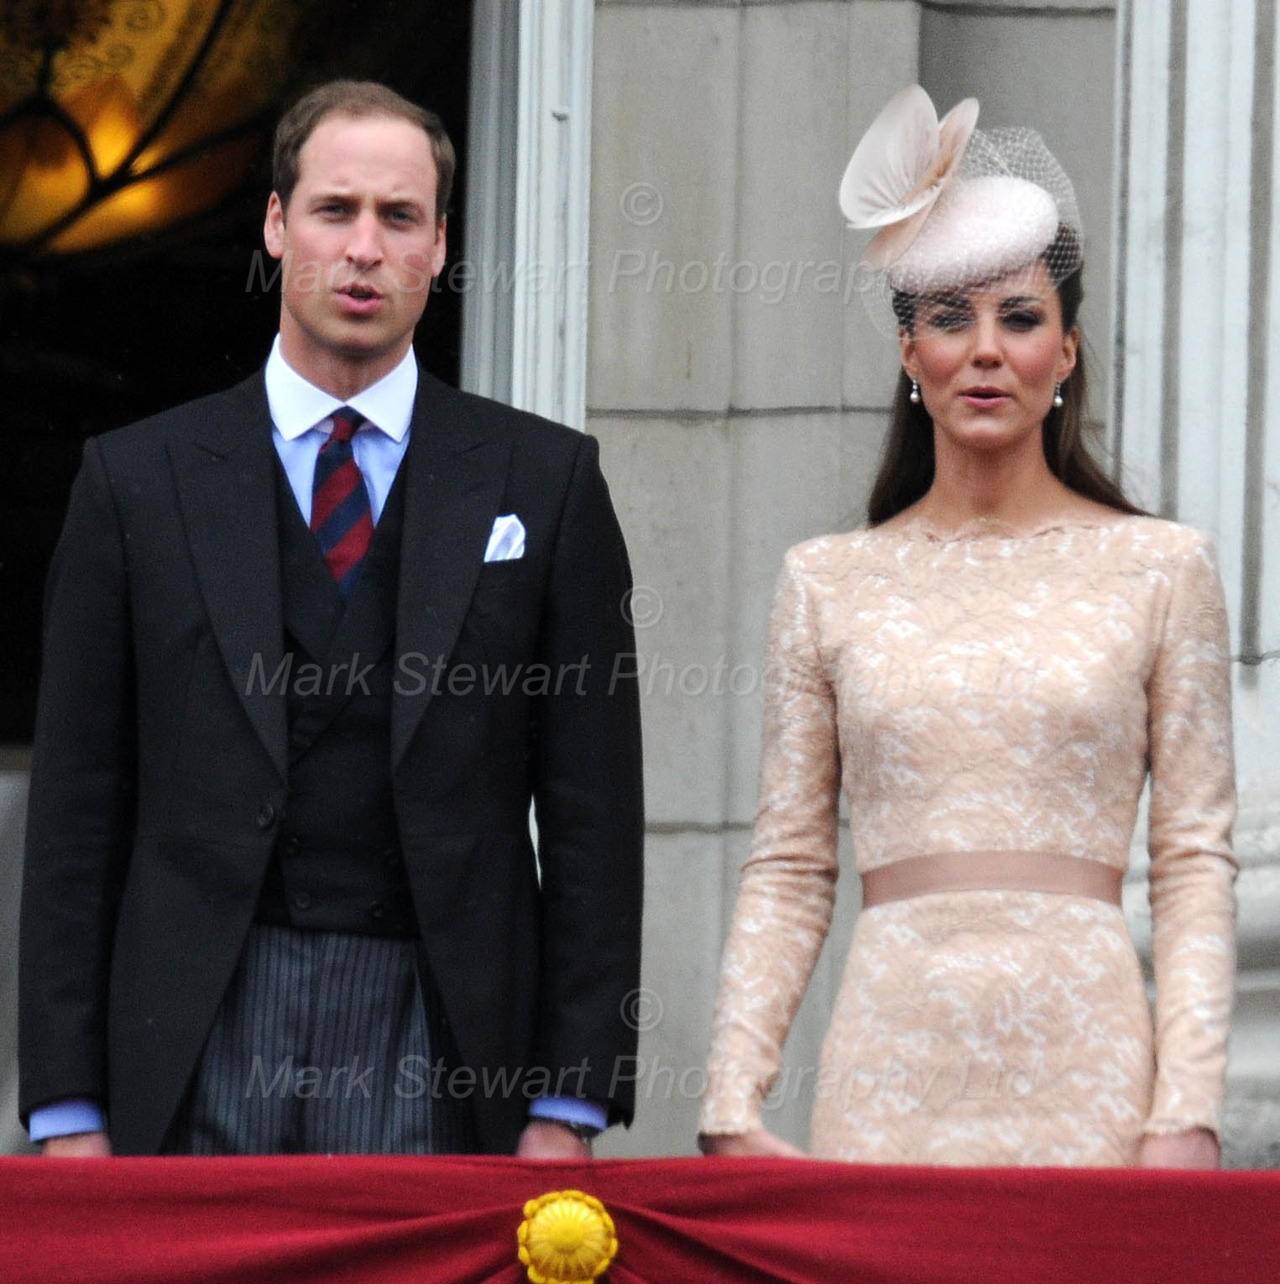 Mark Stewart | The Duke & Duchess of Cambridge join in a rousing...